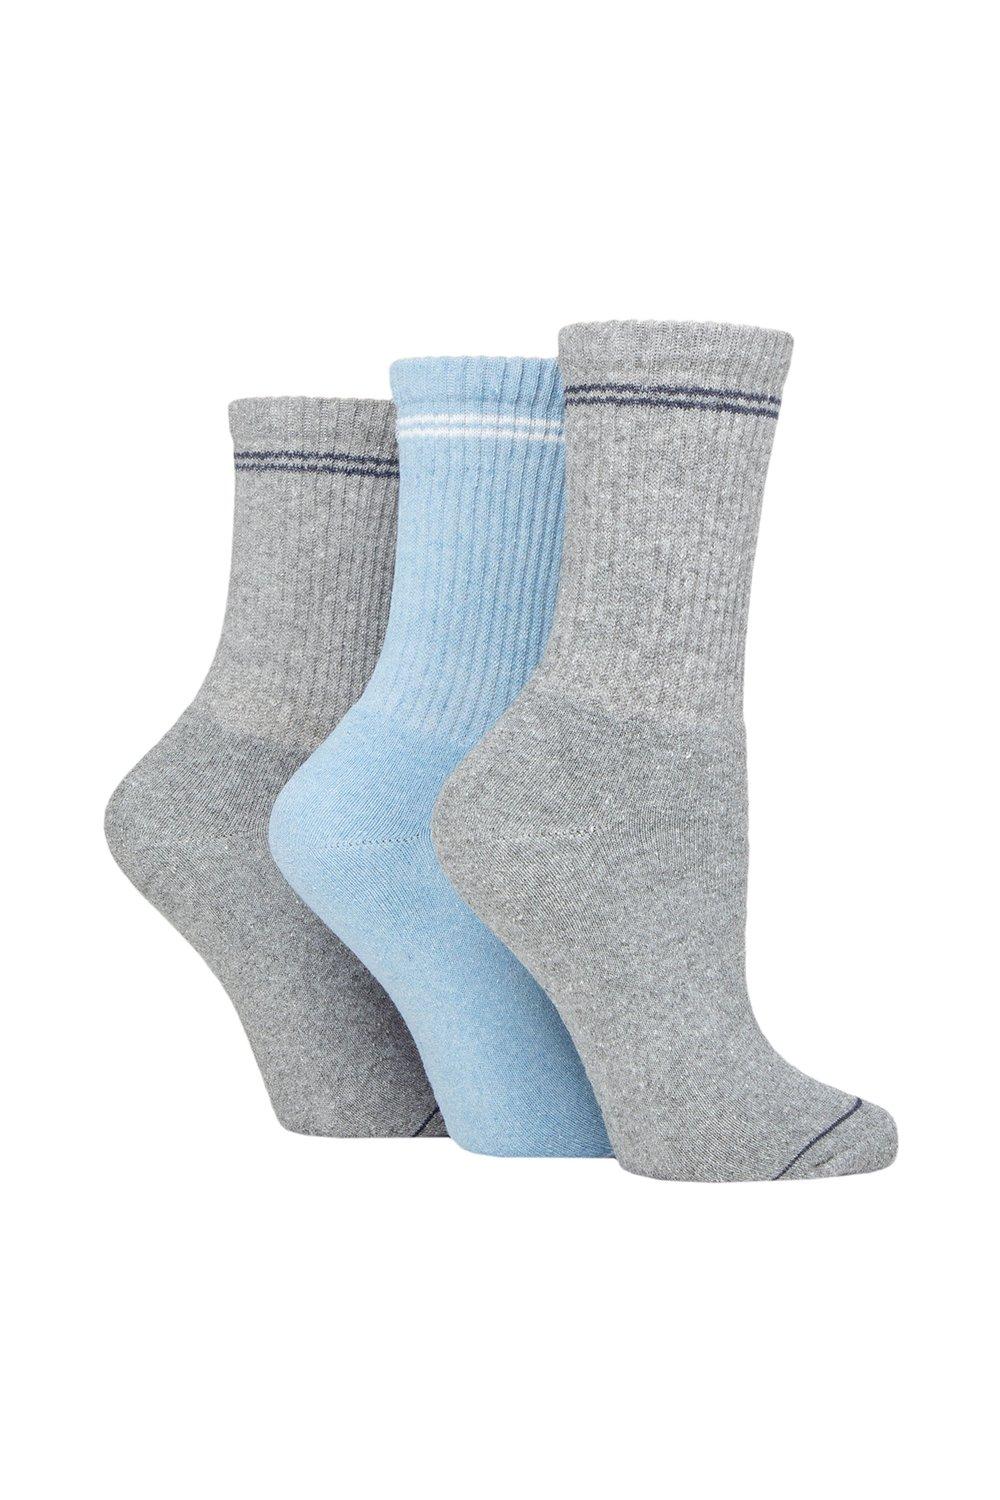 3 Pair 100% Recycled Fashion Cotton Sports Socks